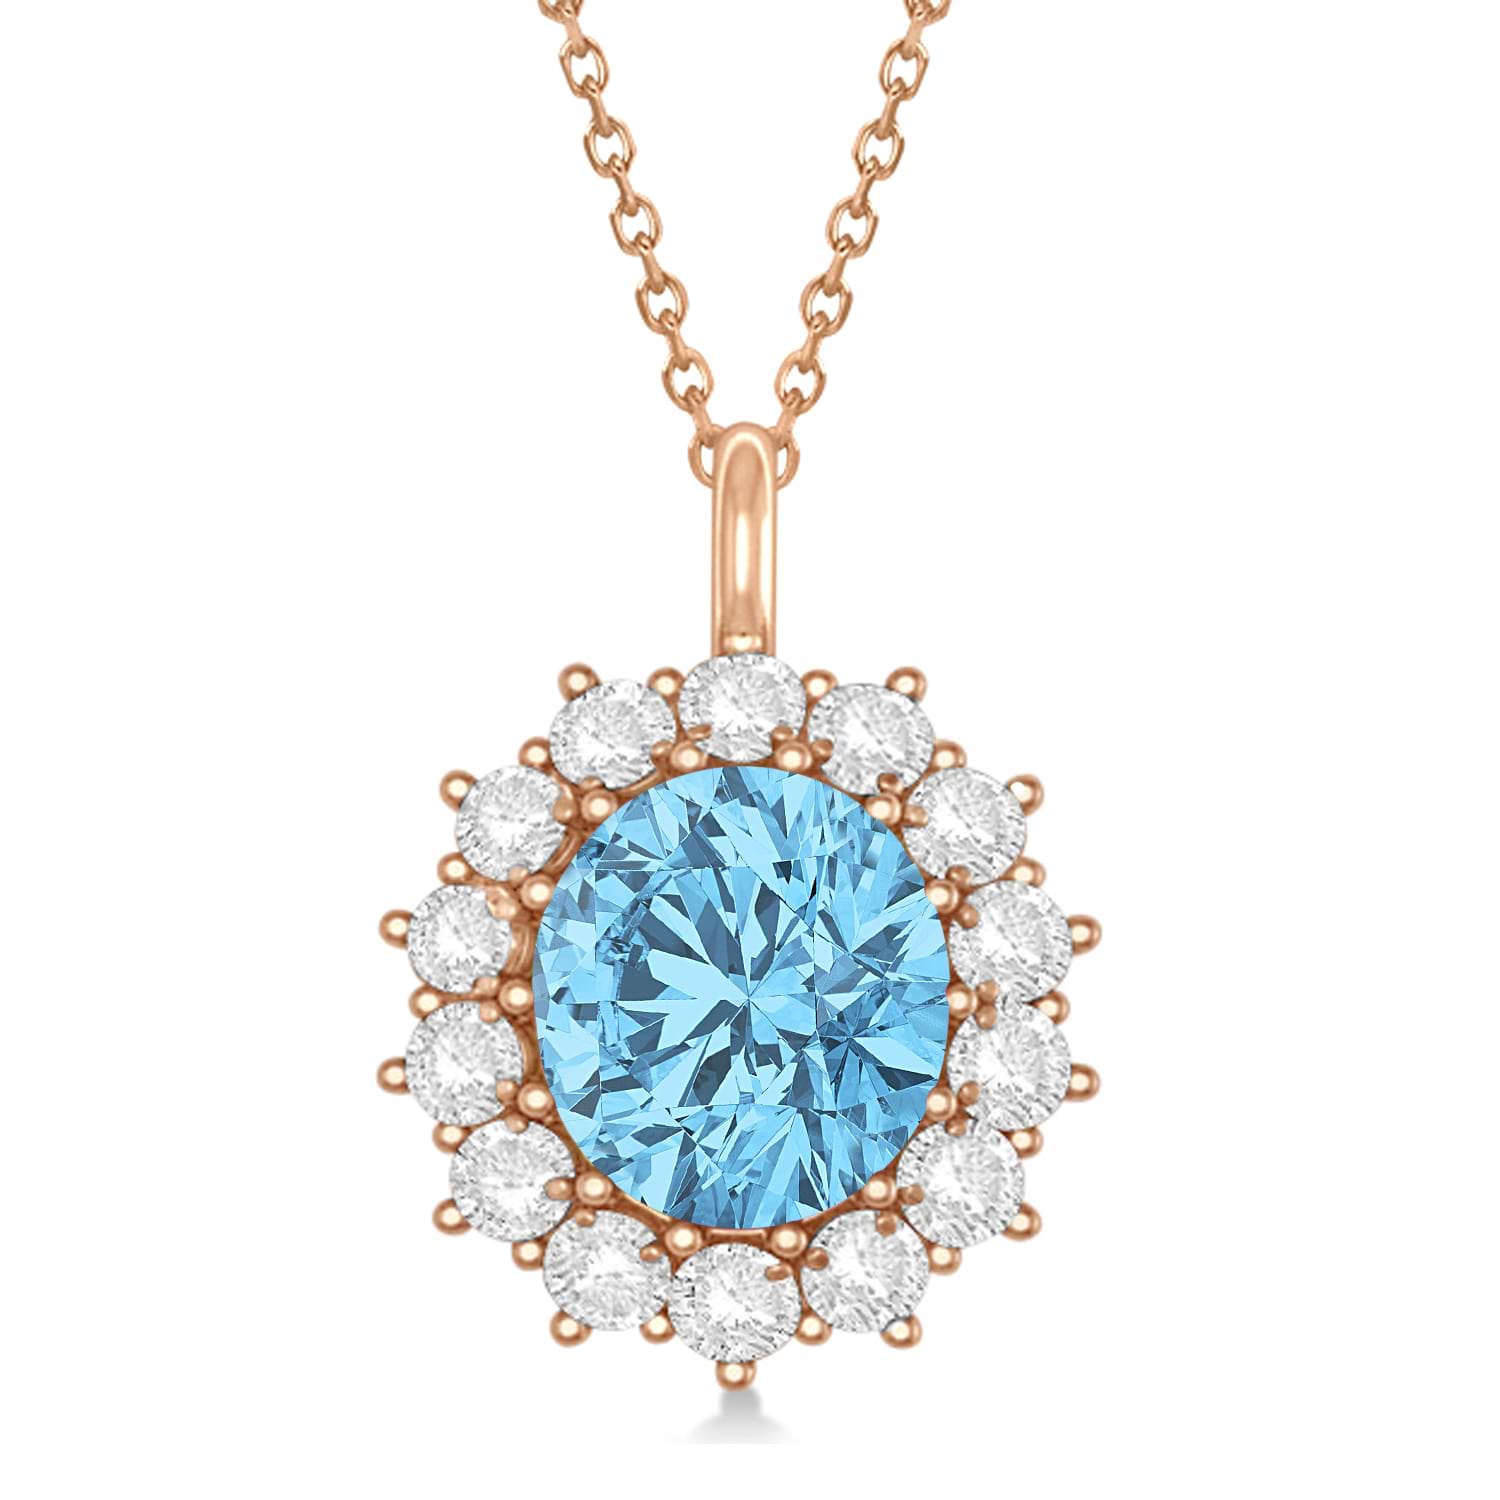 Oval Blue Topaz & Diamond Pendant Necklace 18K Rose Gold (5.40ctw)